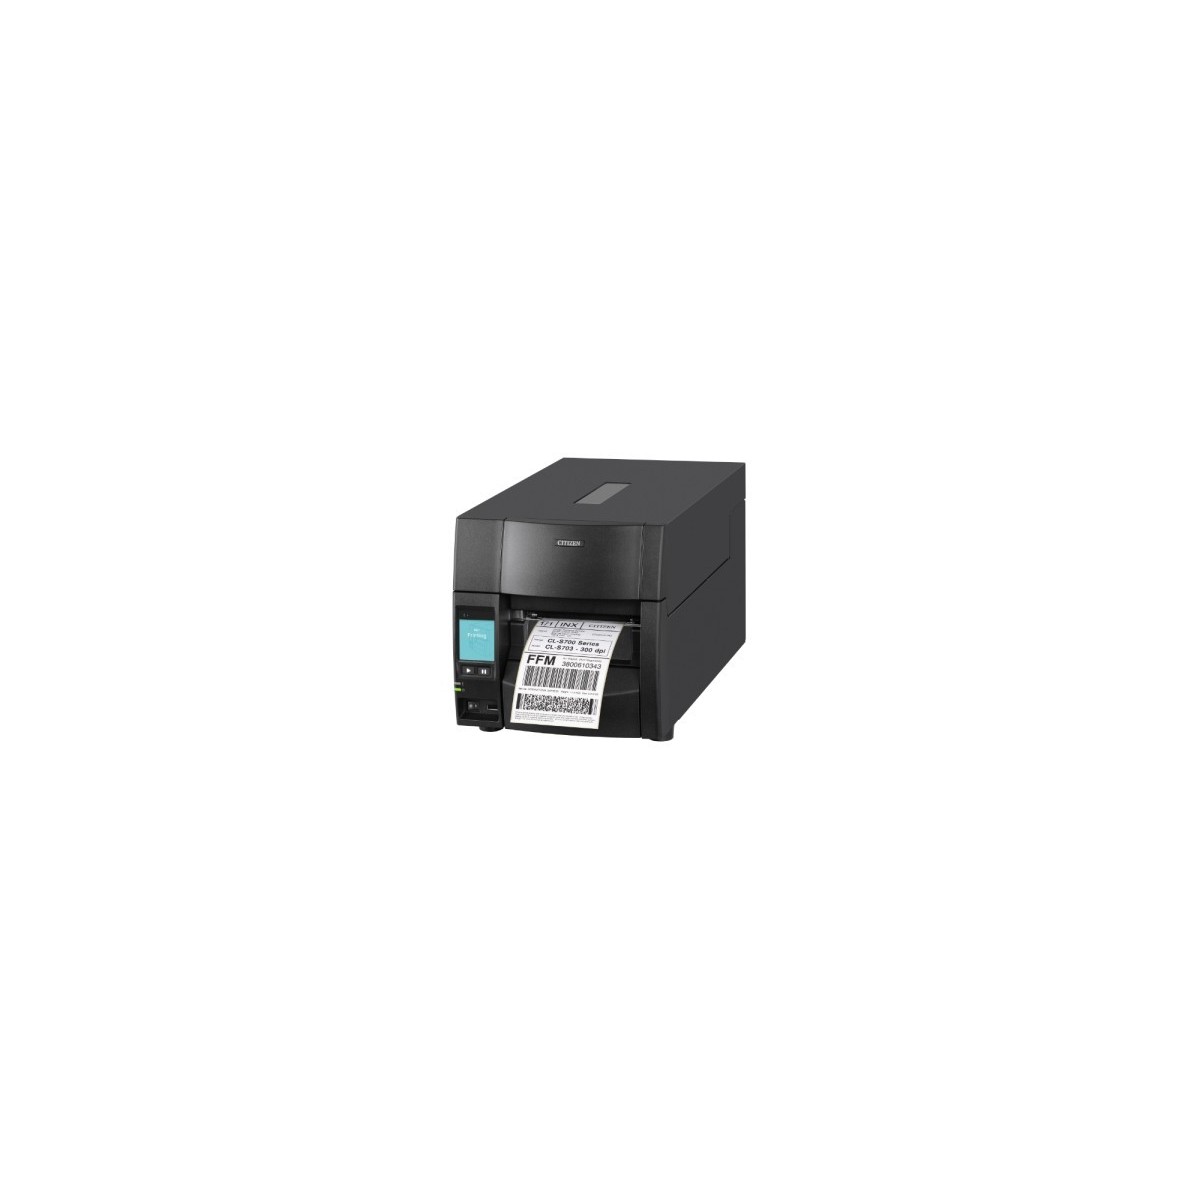 Citizen CL-S700III Printer Black USB LAN - Label Printer